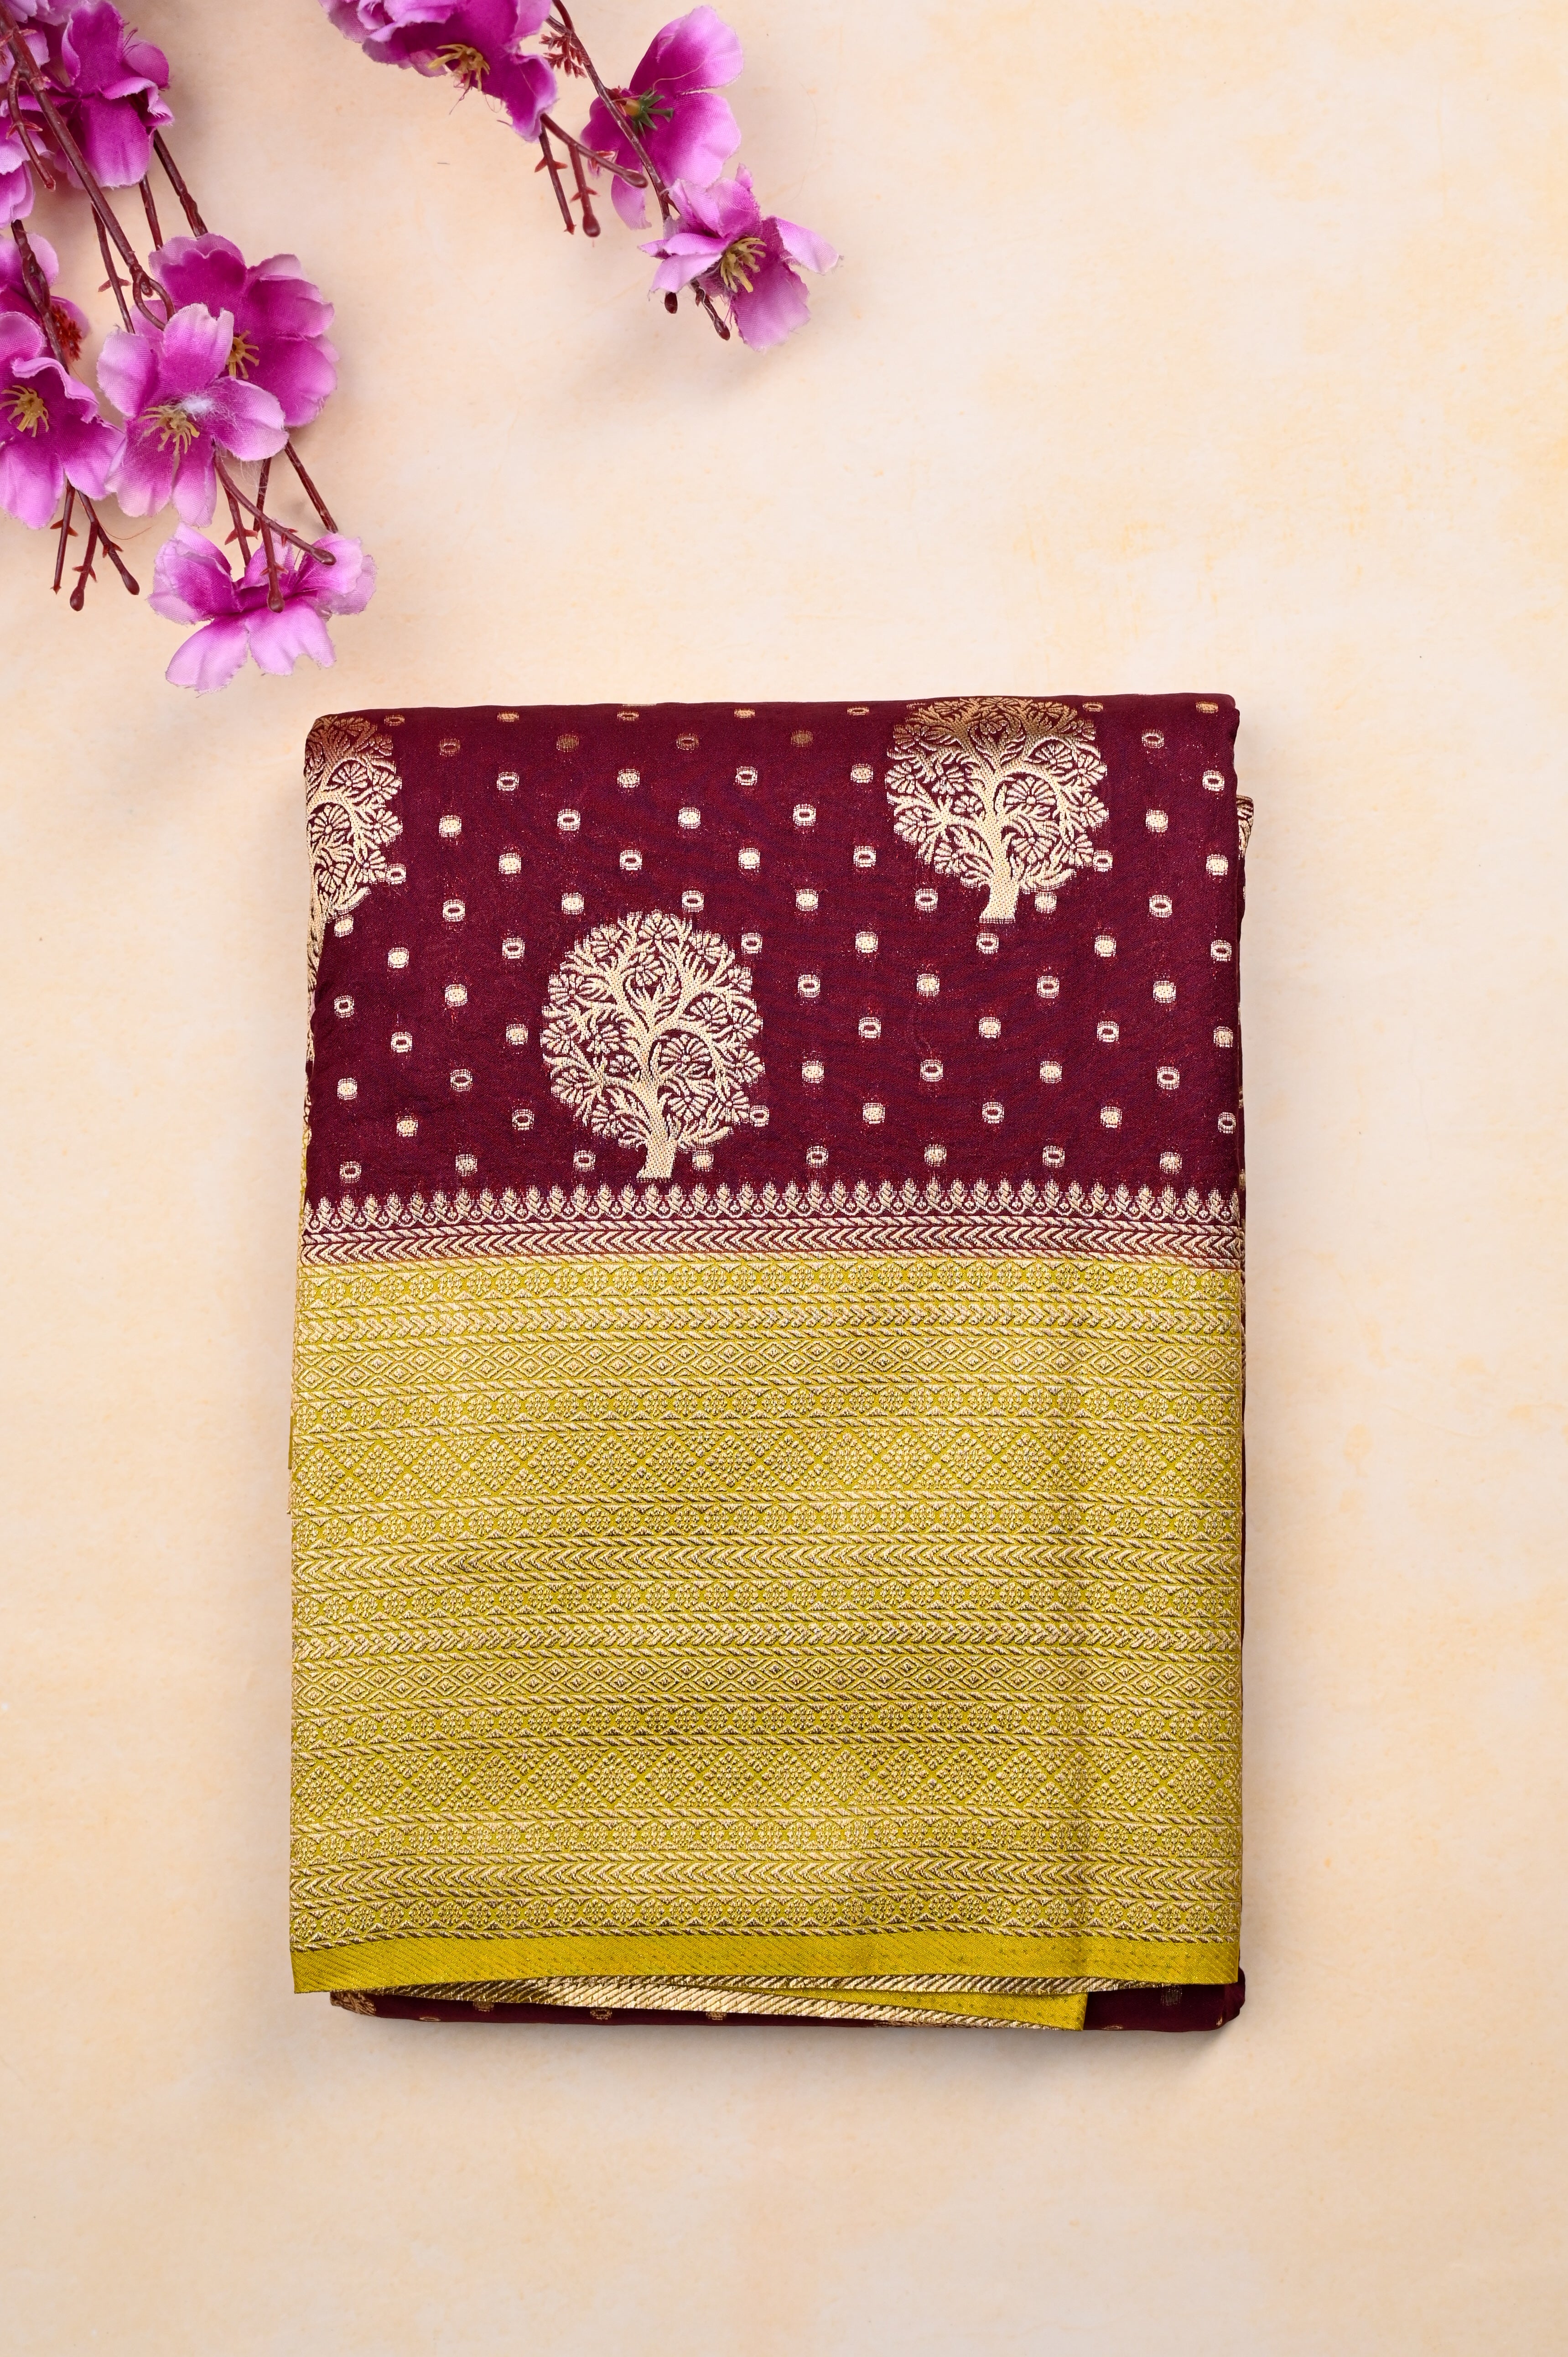 Banaras fancy saree maroon and yellow color with allover zari motive weaves, big zari border, pallu and plain blouse.